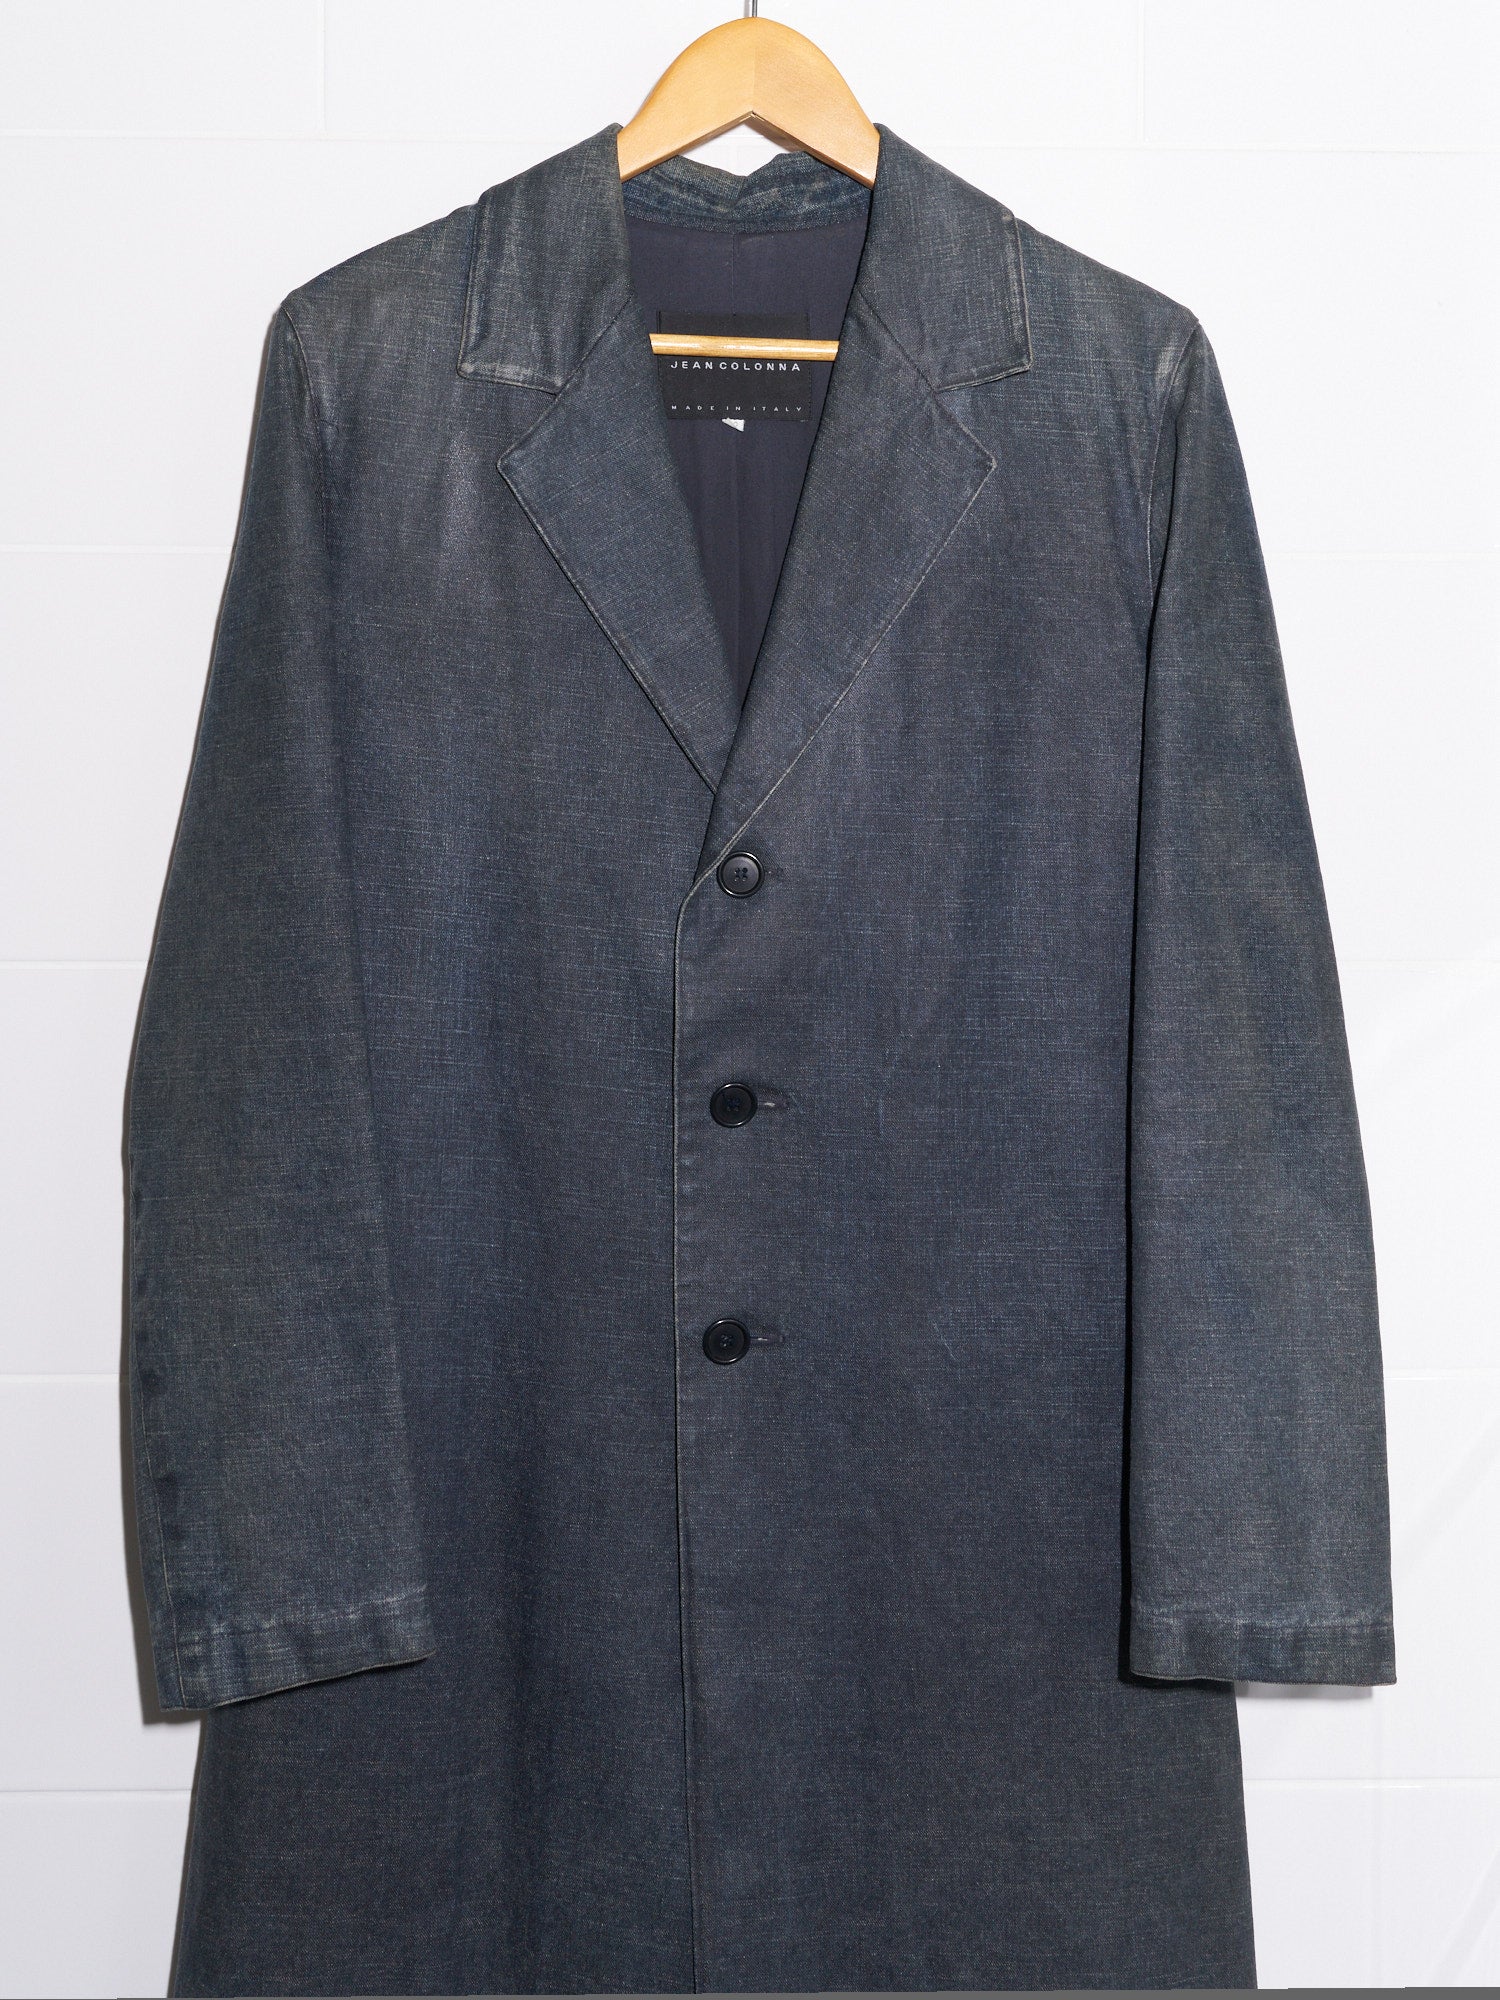 Jean Colonna grey coated cotton full length denim coat - size 42